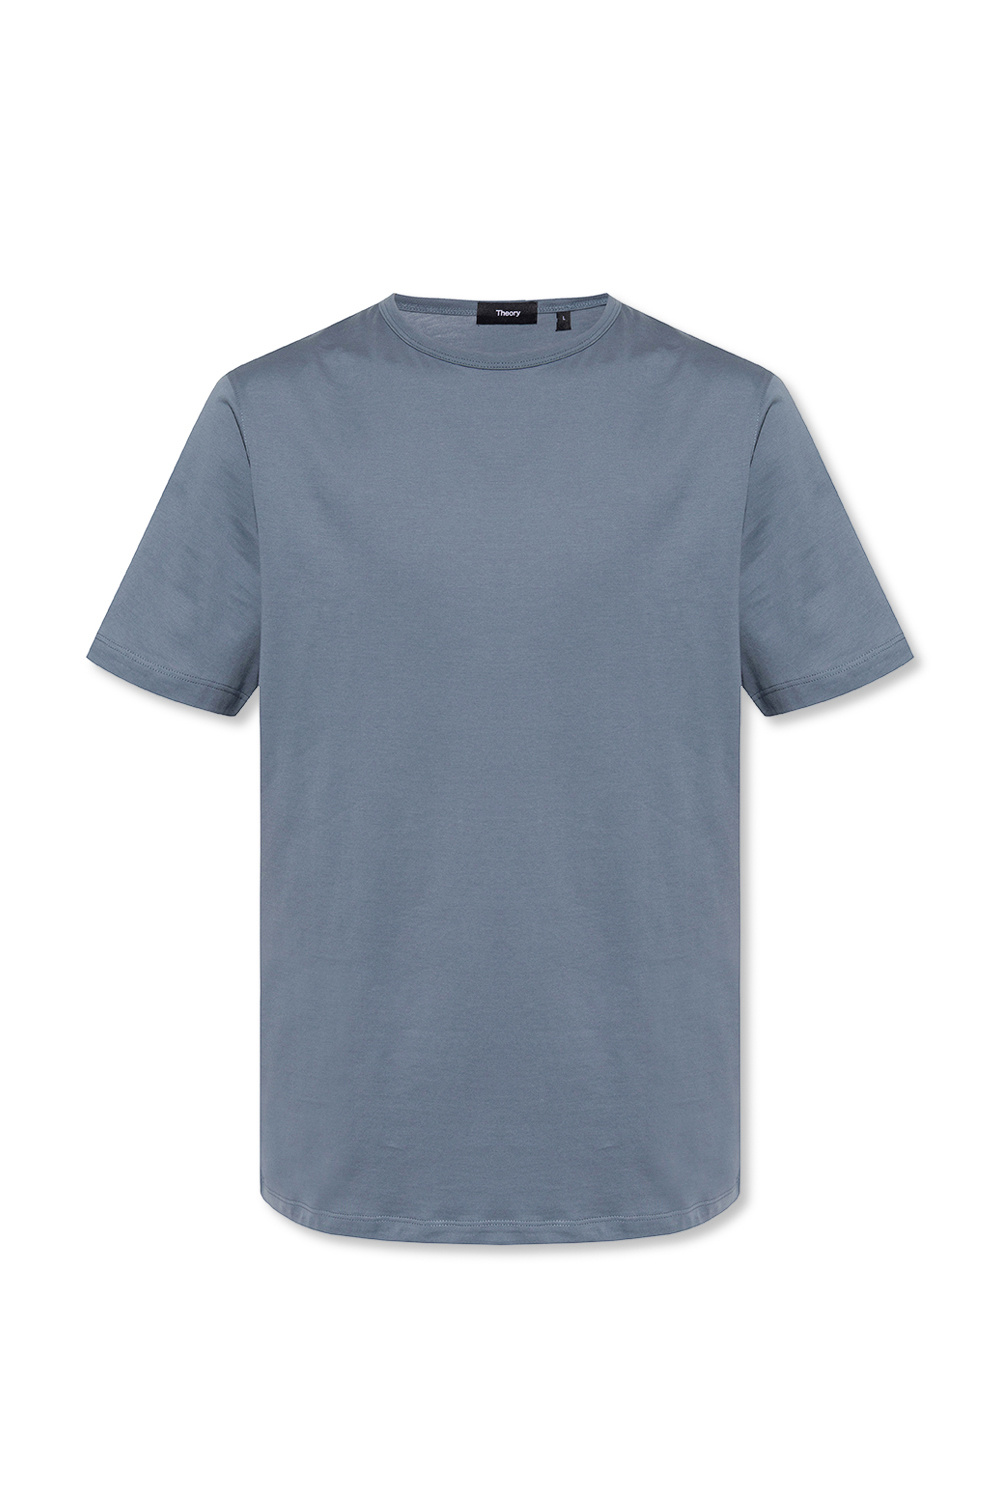 long CamaragrancanariaShops vauthier shirt alexandre - item line - Crewneck Iraq T Theory style shirt Grey -